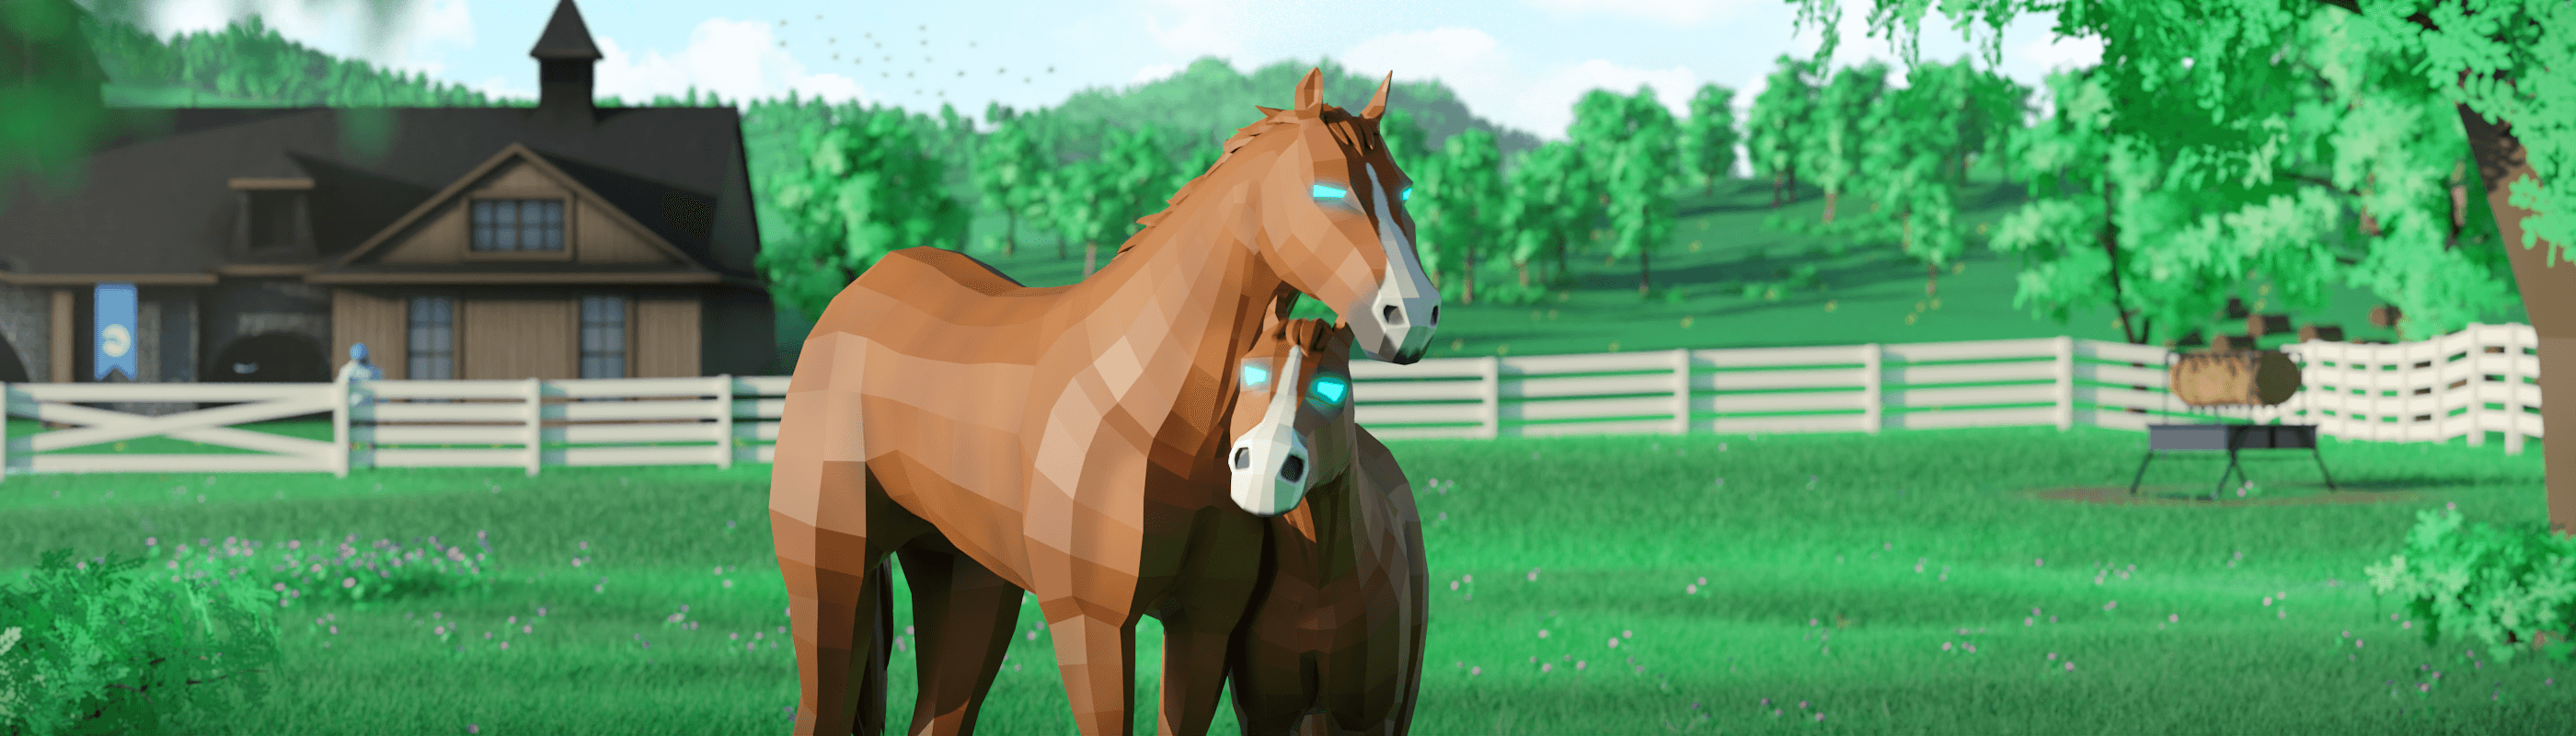 Silks Thoroughbred Racehorses